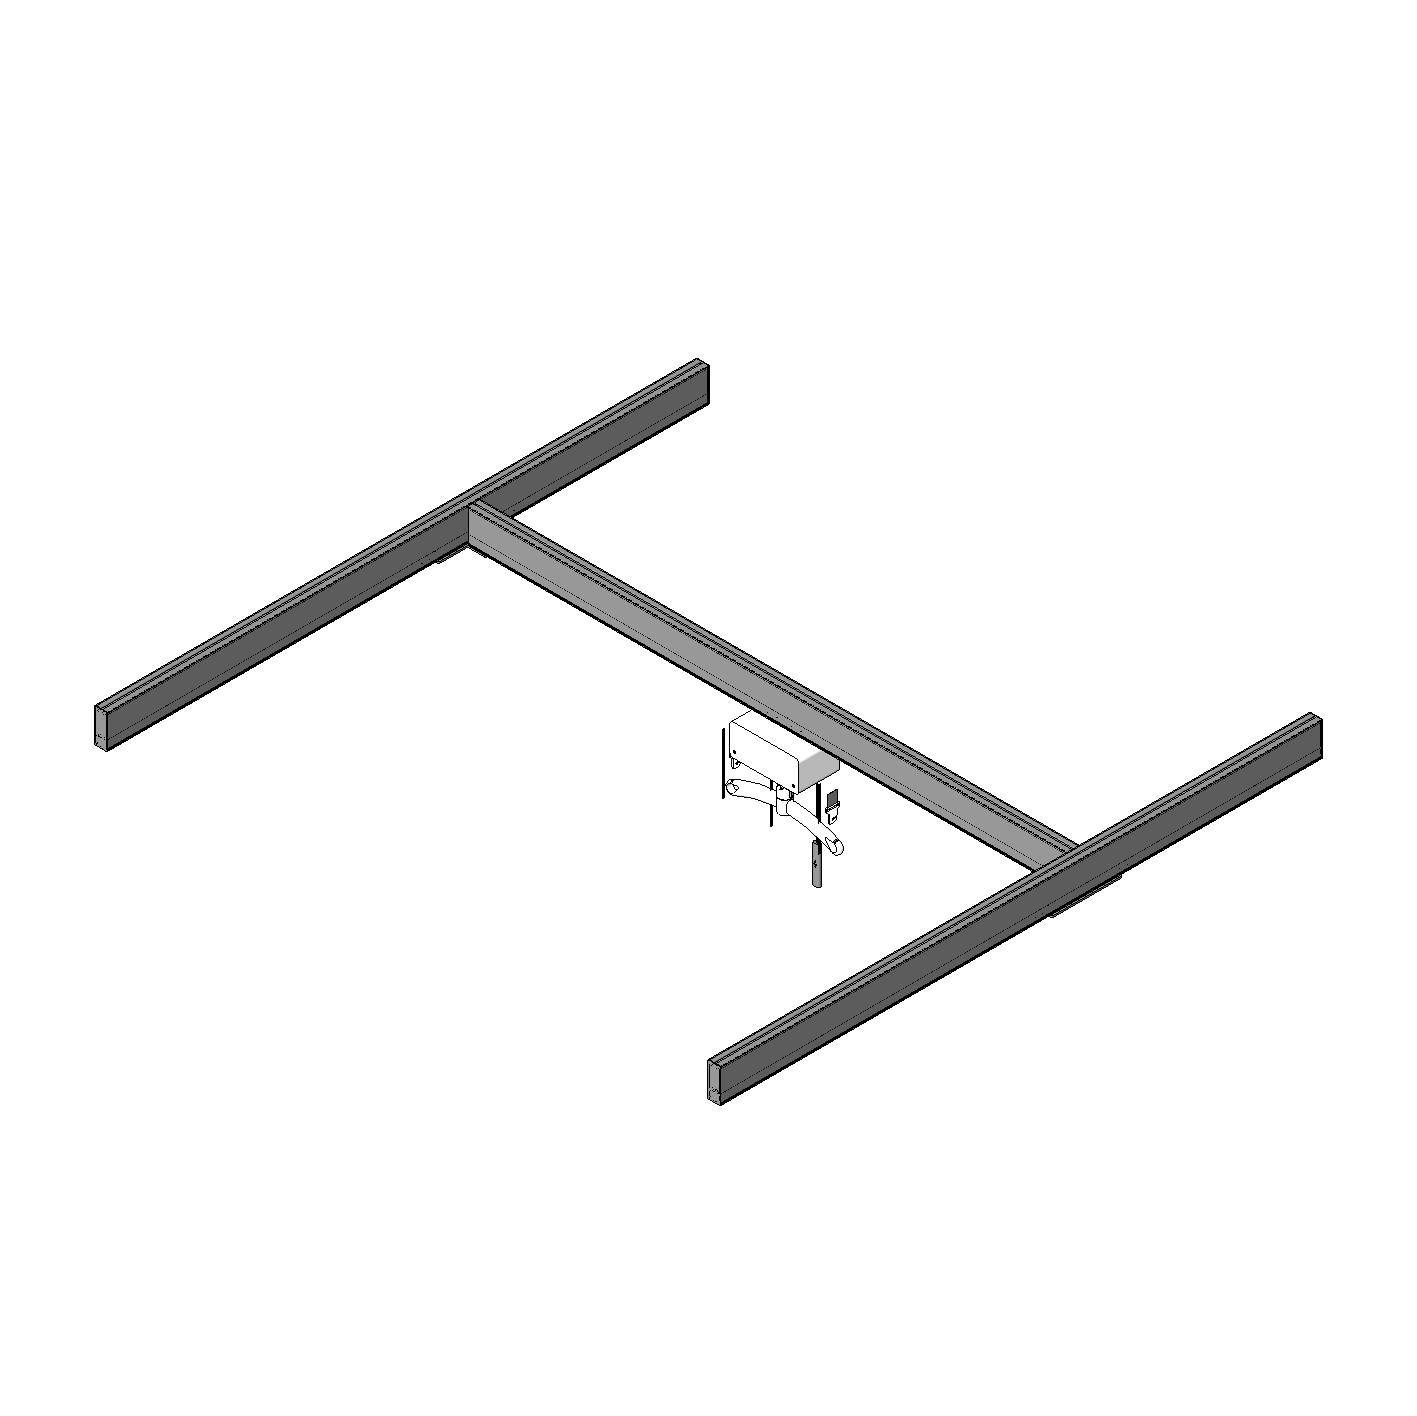 Ceiling Track Hoist - System Type C